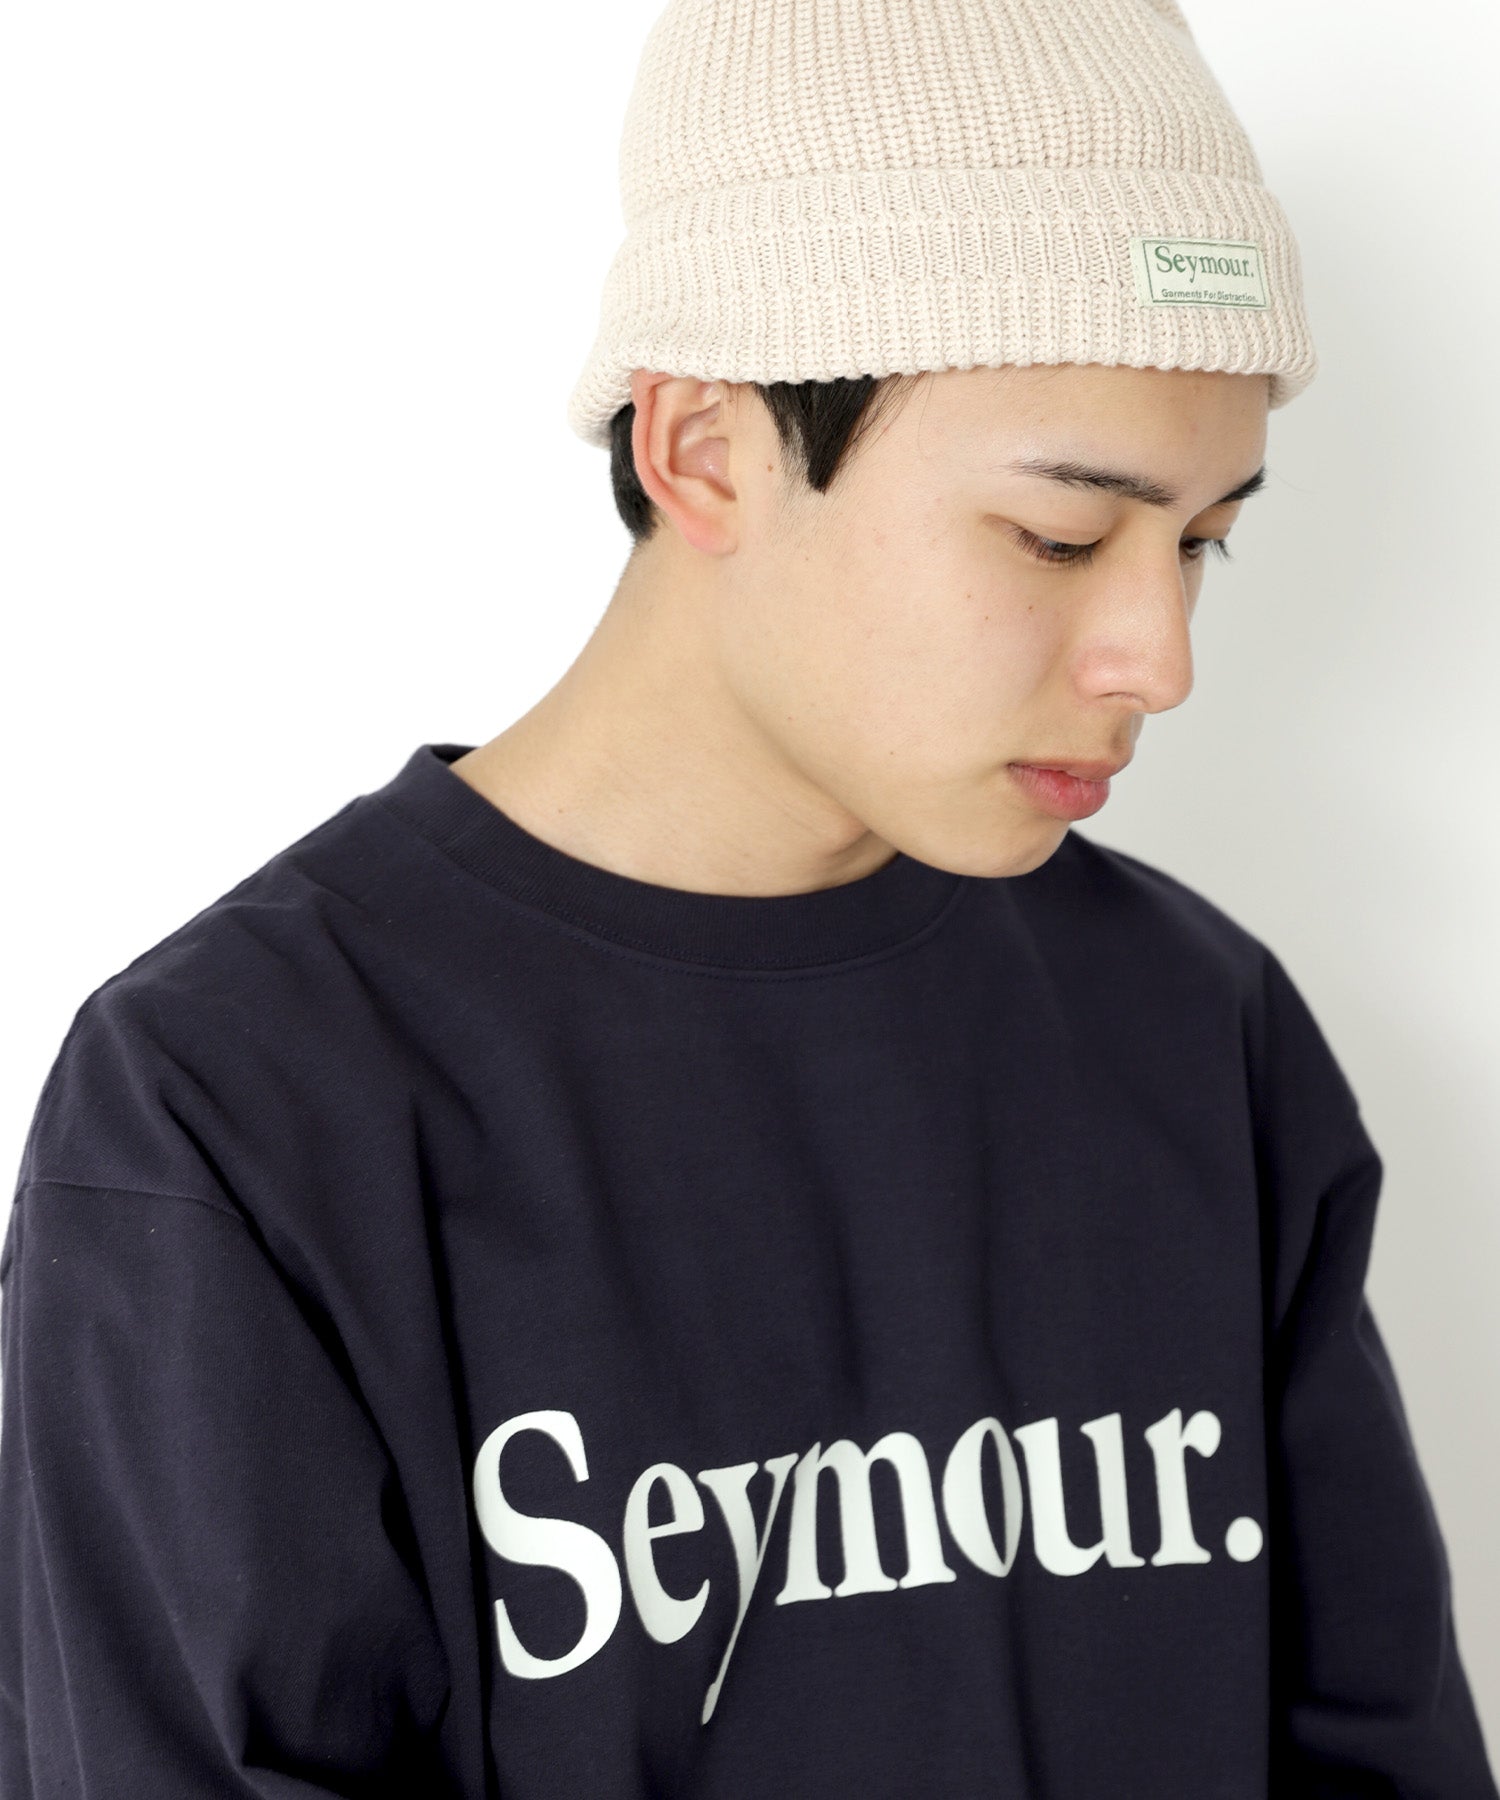 Seymour. "Cotton" KNIT WATCH CAP